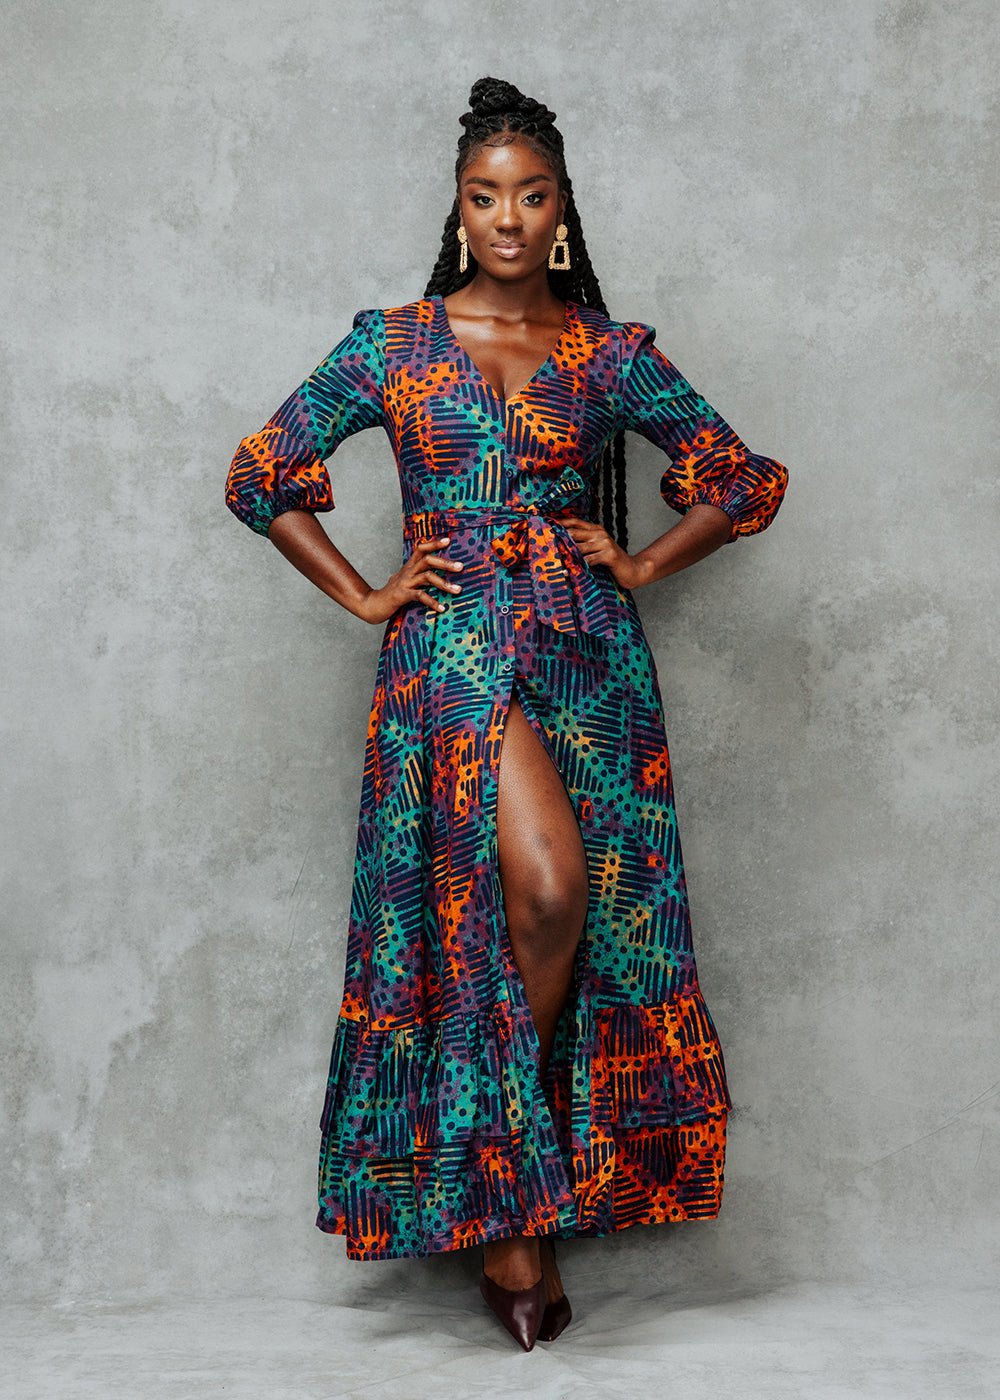 Zendaya Women's African Print Maxi Dress (Jade Amber Adire)